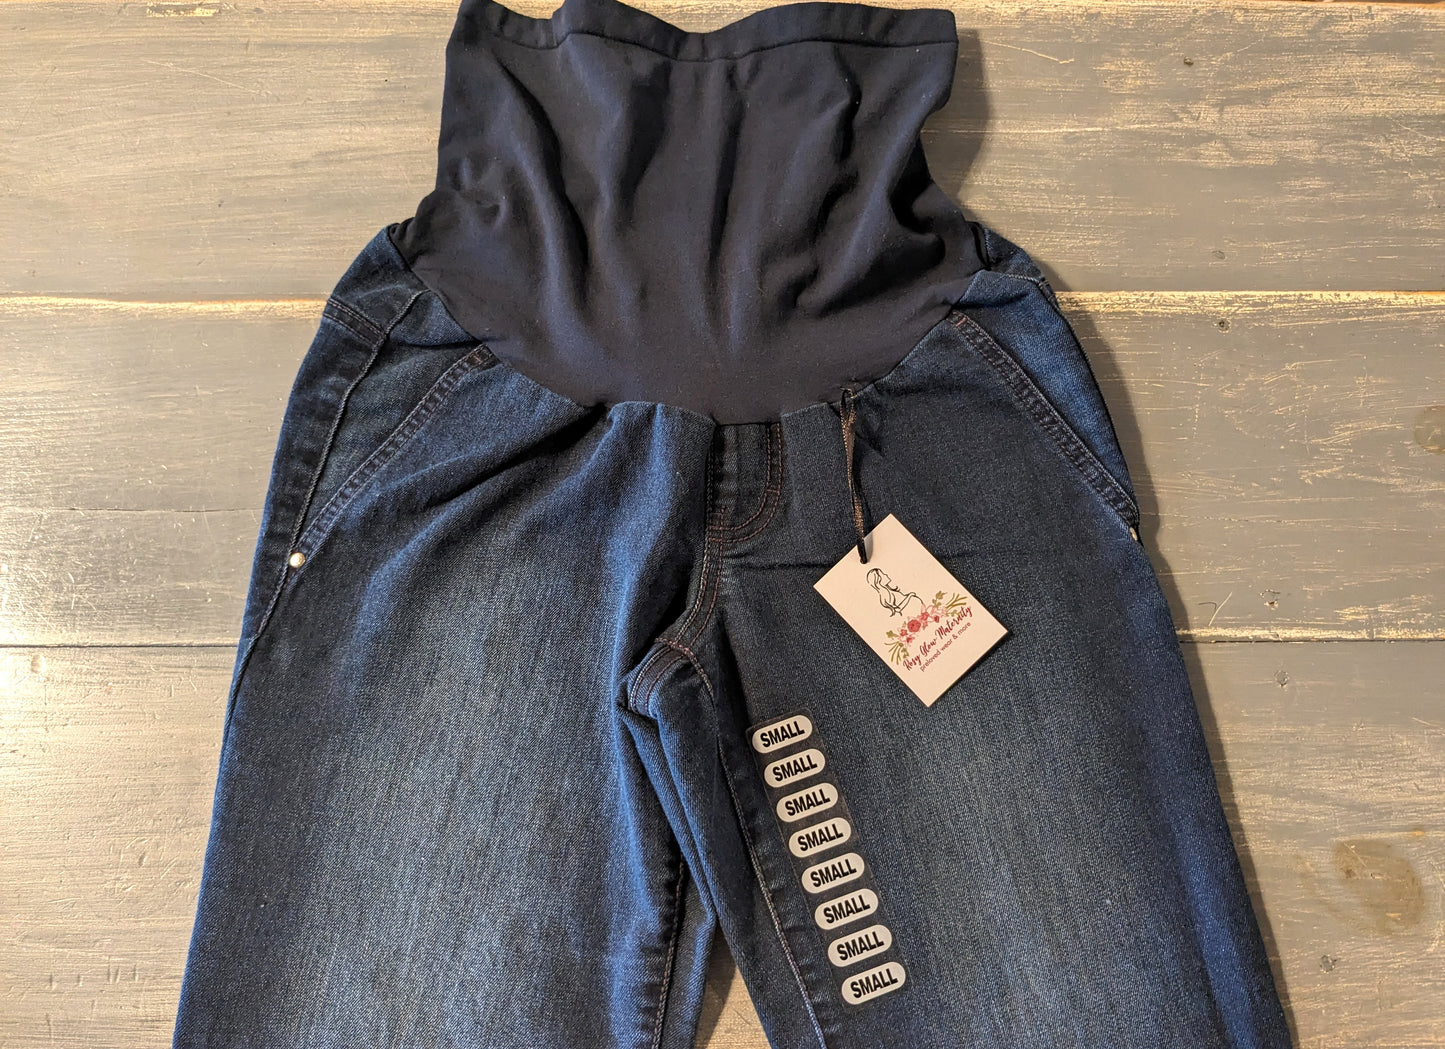 Full panel 29" bootcut jeans, Multi wash